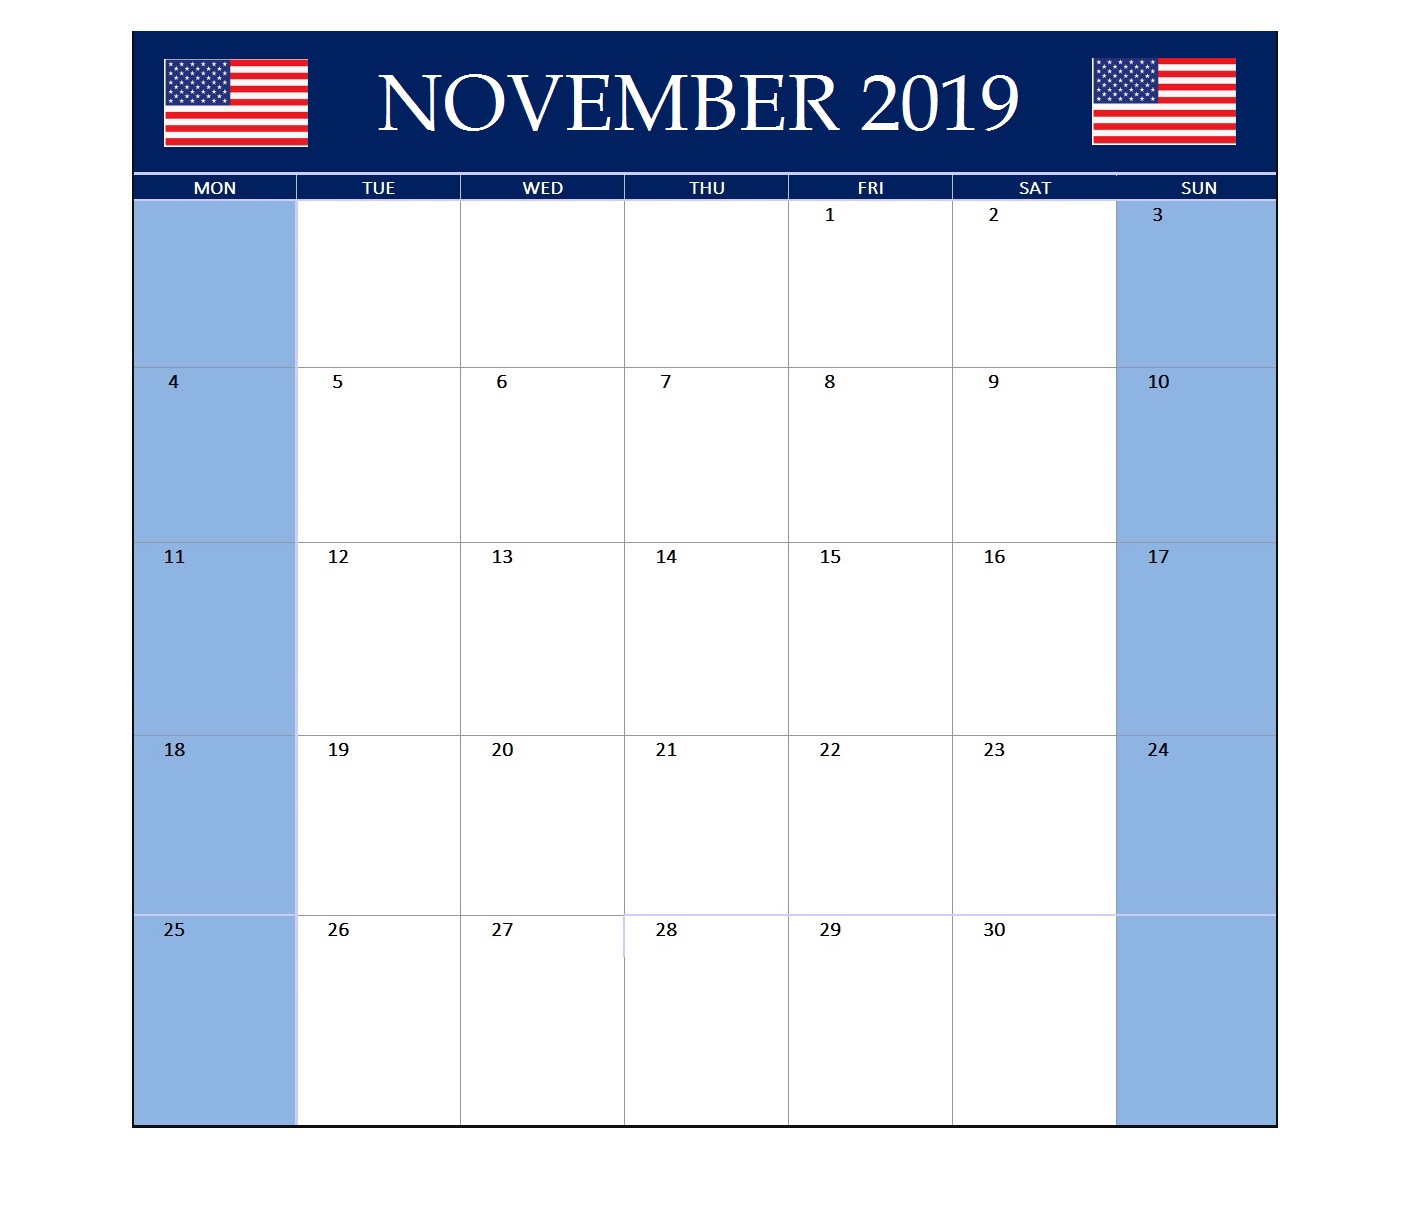 November 2019 United States Holidays Calendar